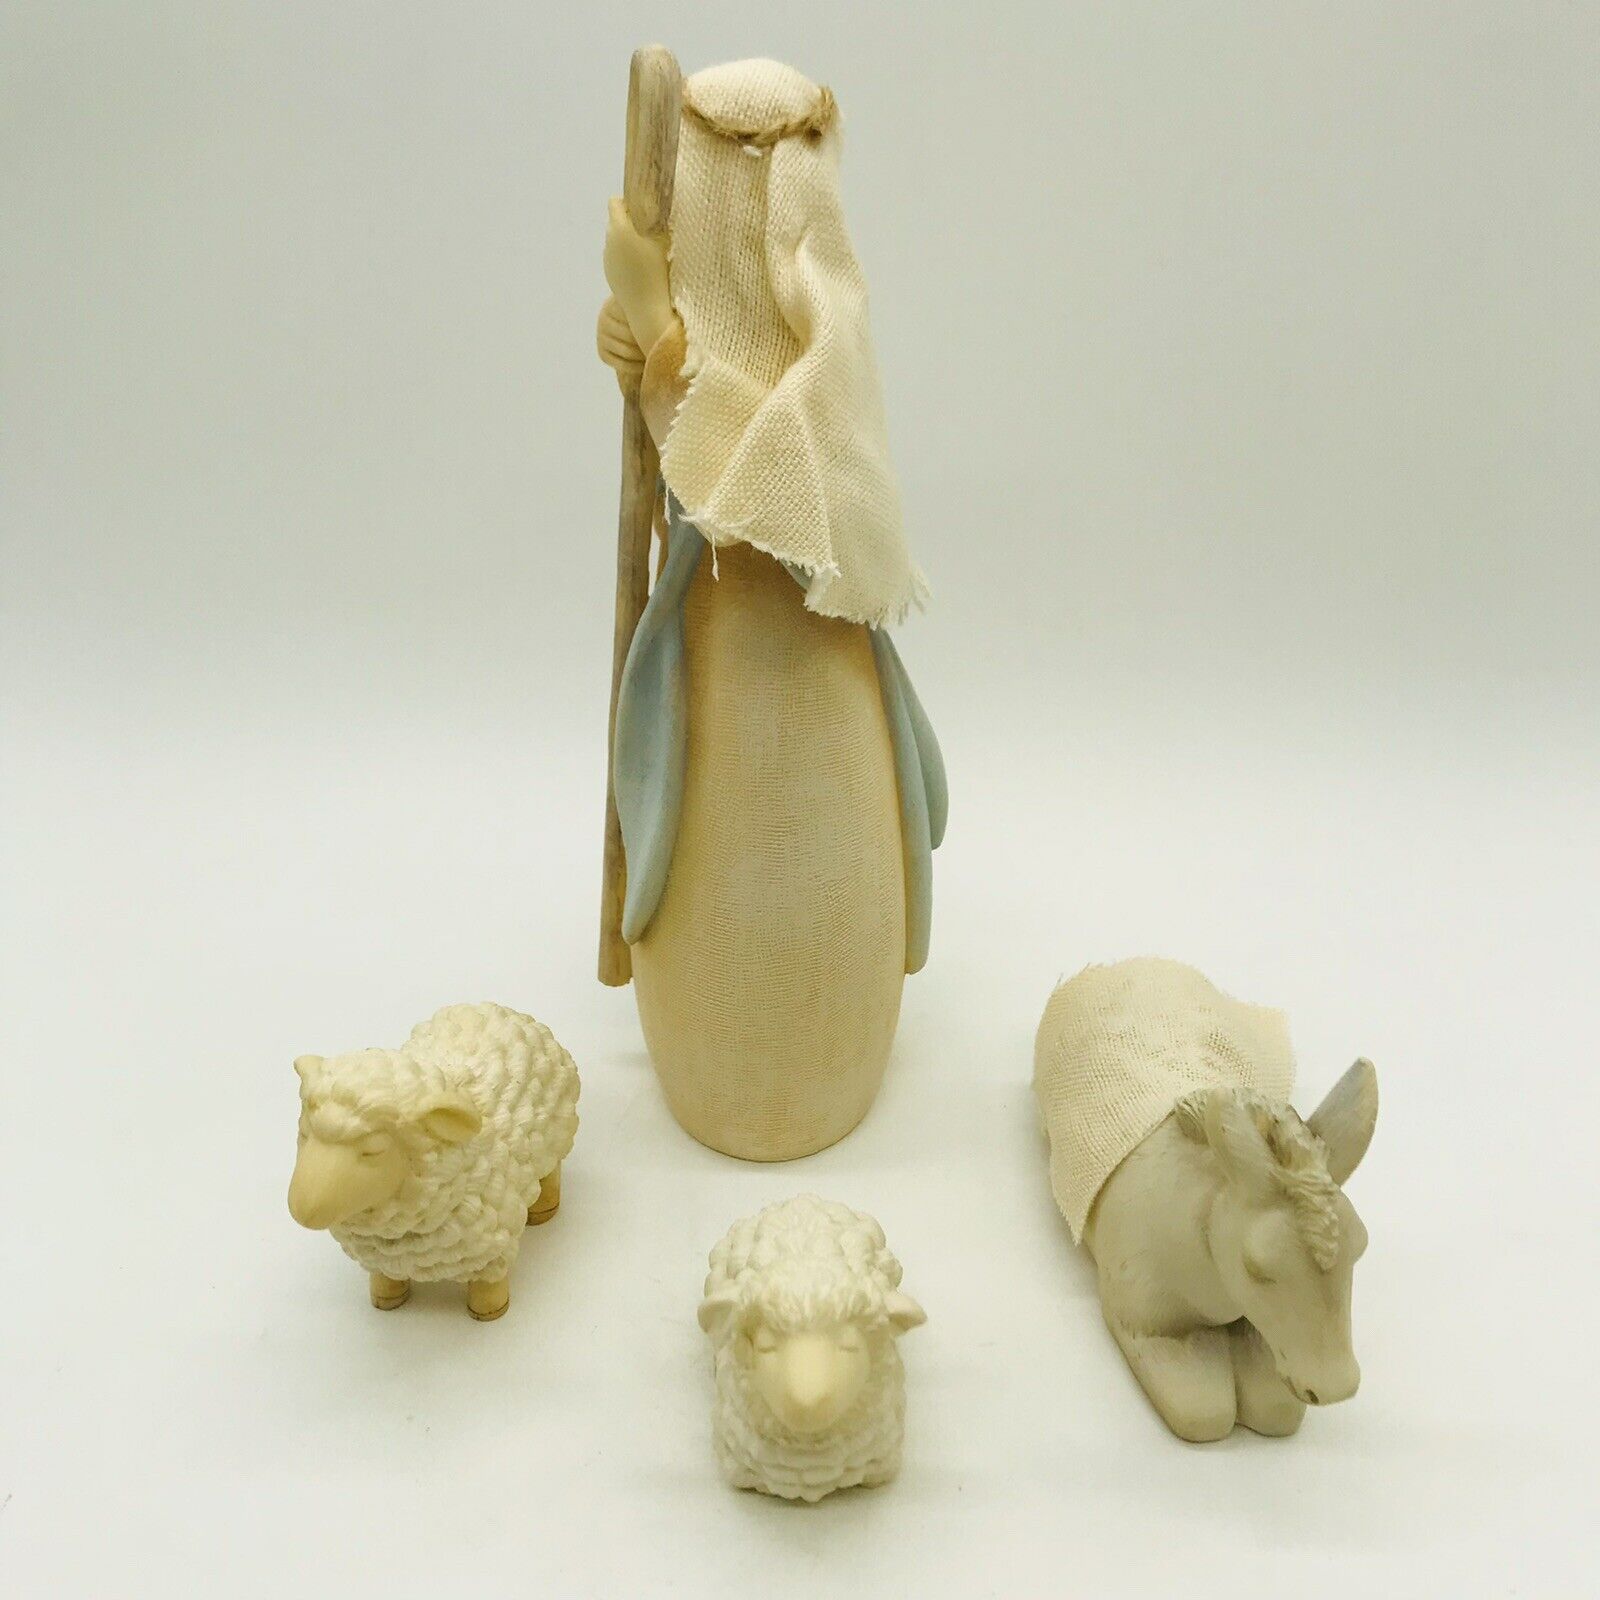 Foundations By Enesco Shepherd With Animals 4 Piece Set Figurine